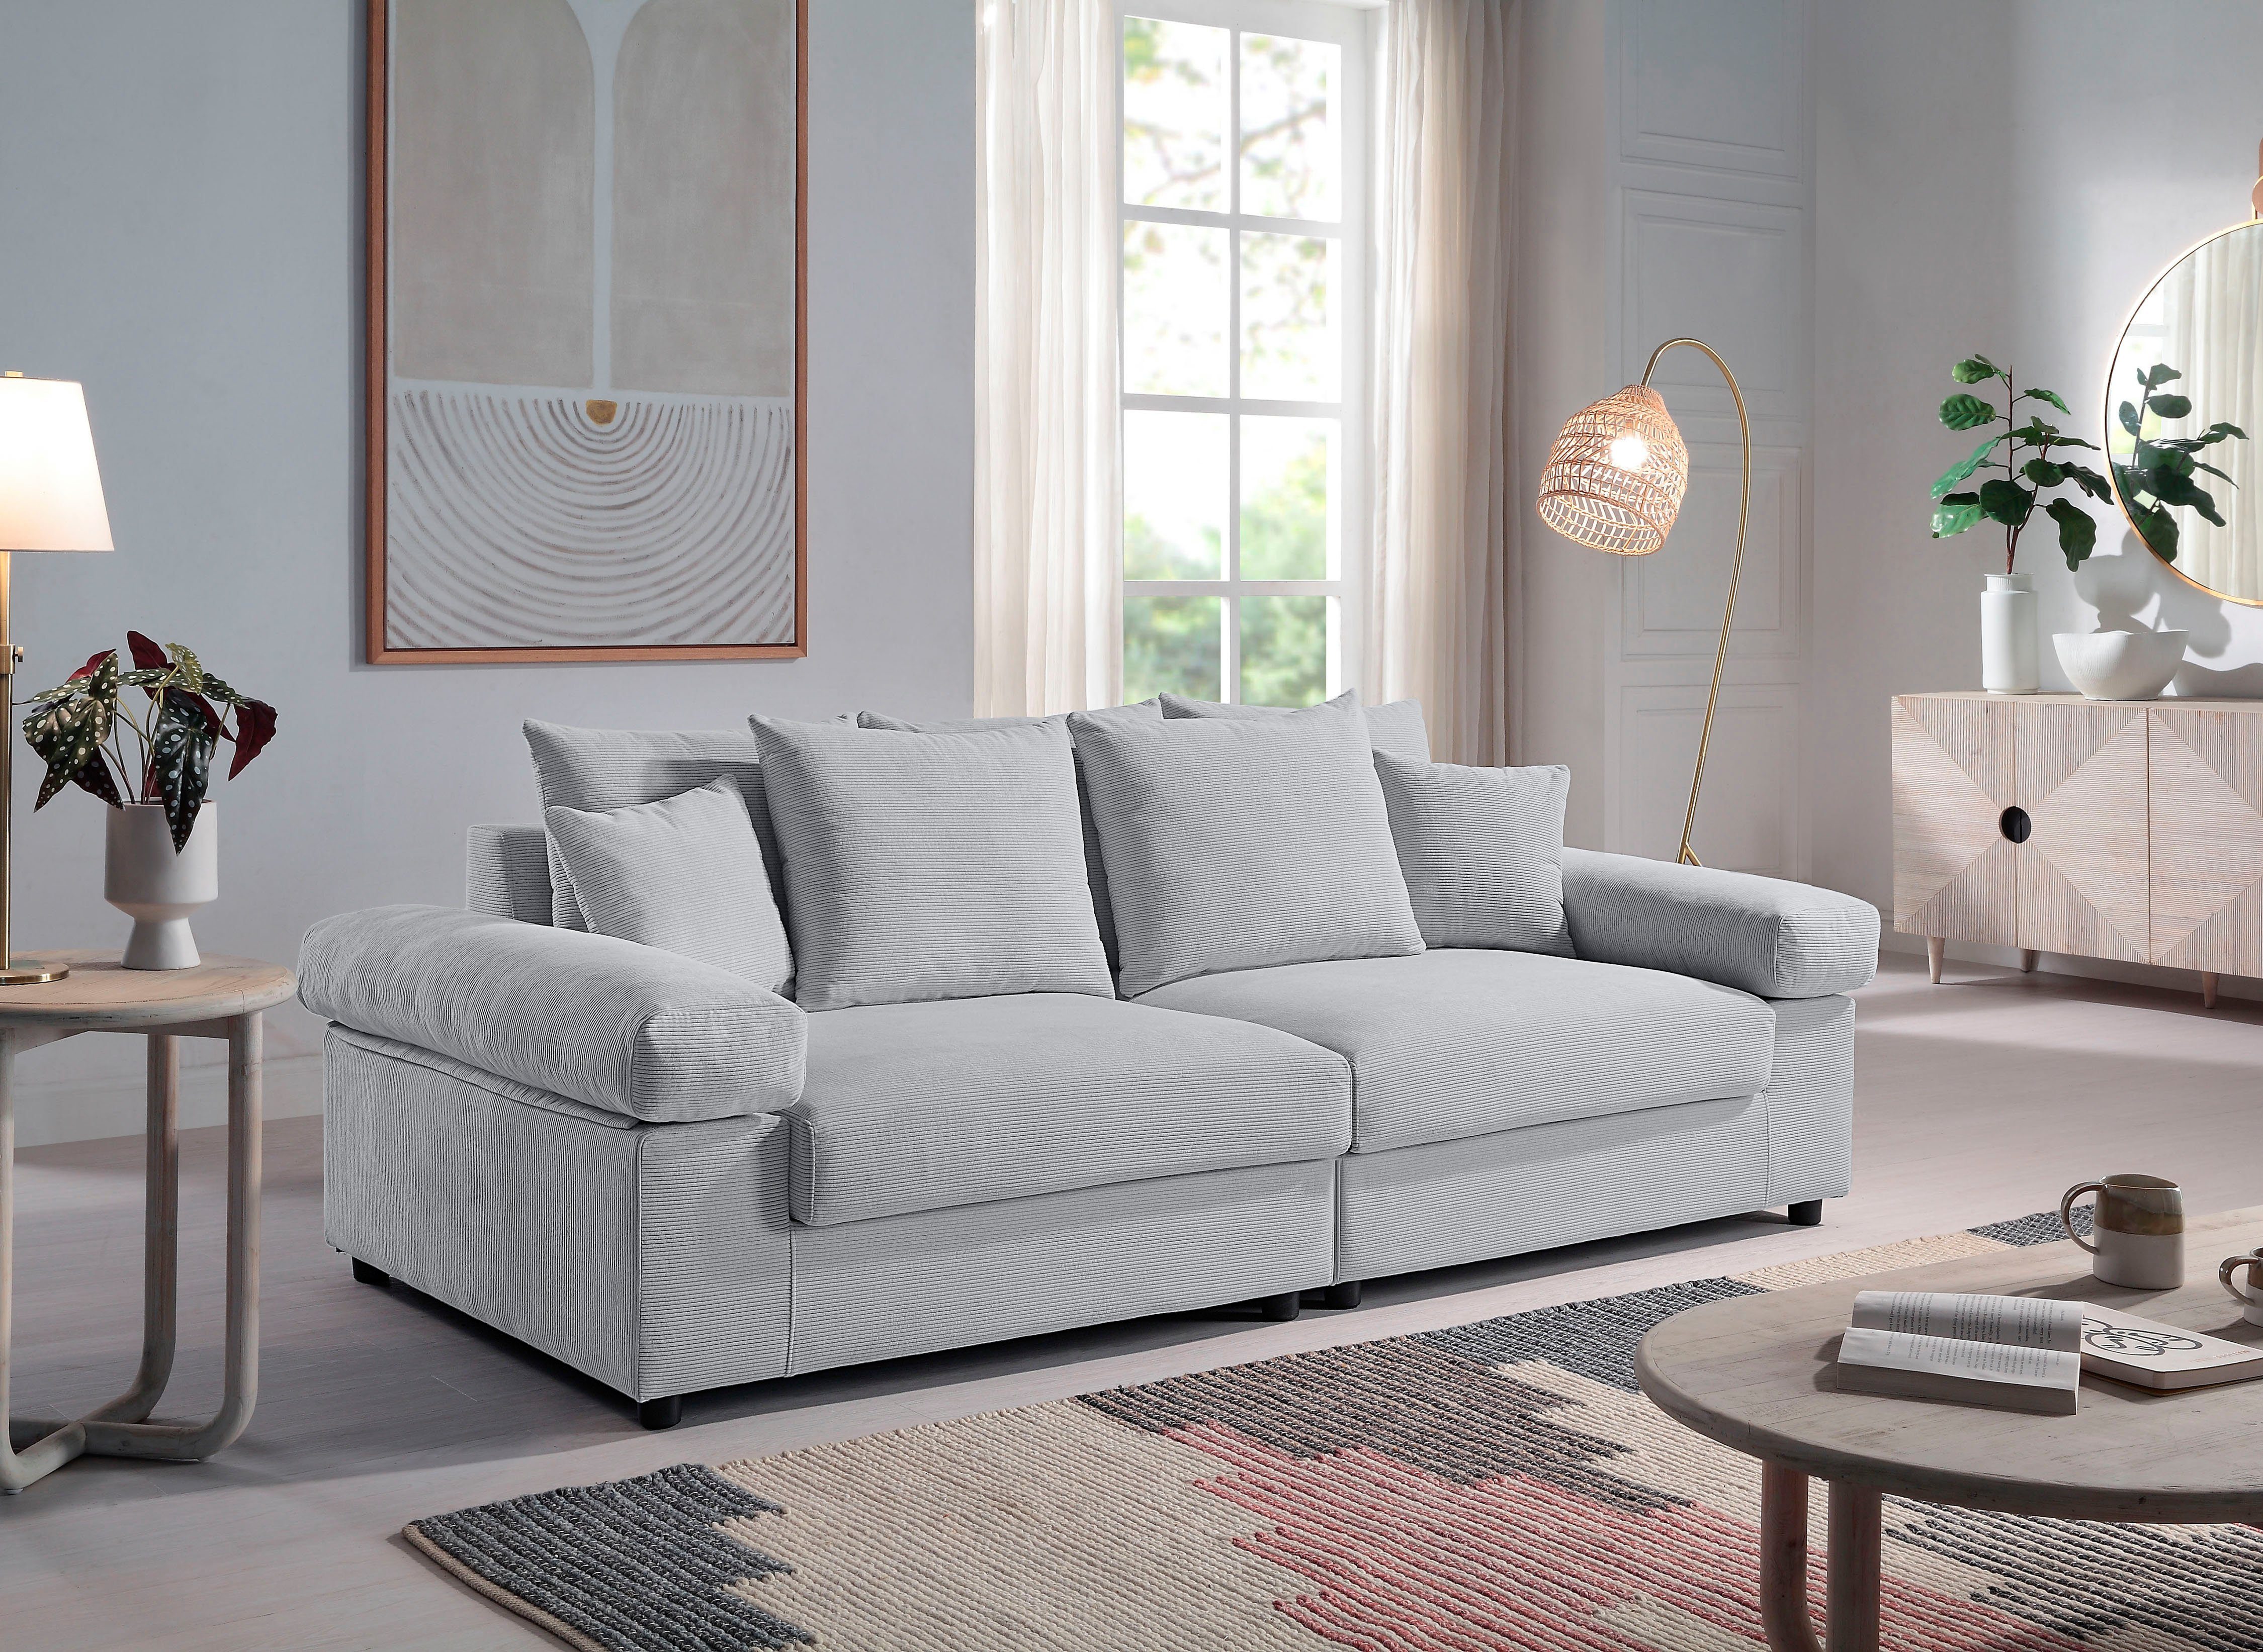 ATLANTIC home Bjoern, Cord-Bezug, collection Federkern, mit XXL-Sitzfläche, frei stellbar im grau Big-Sofa mit Raum